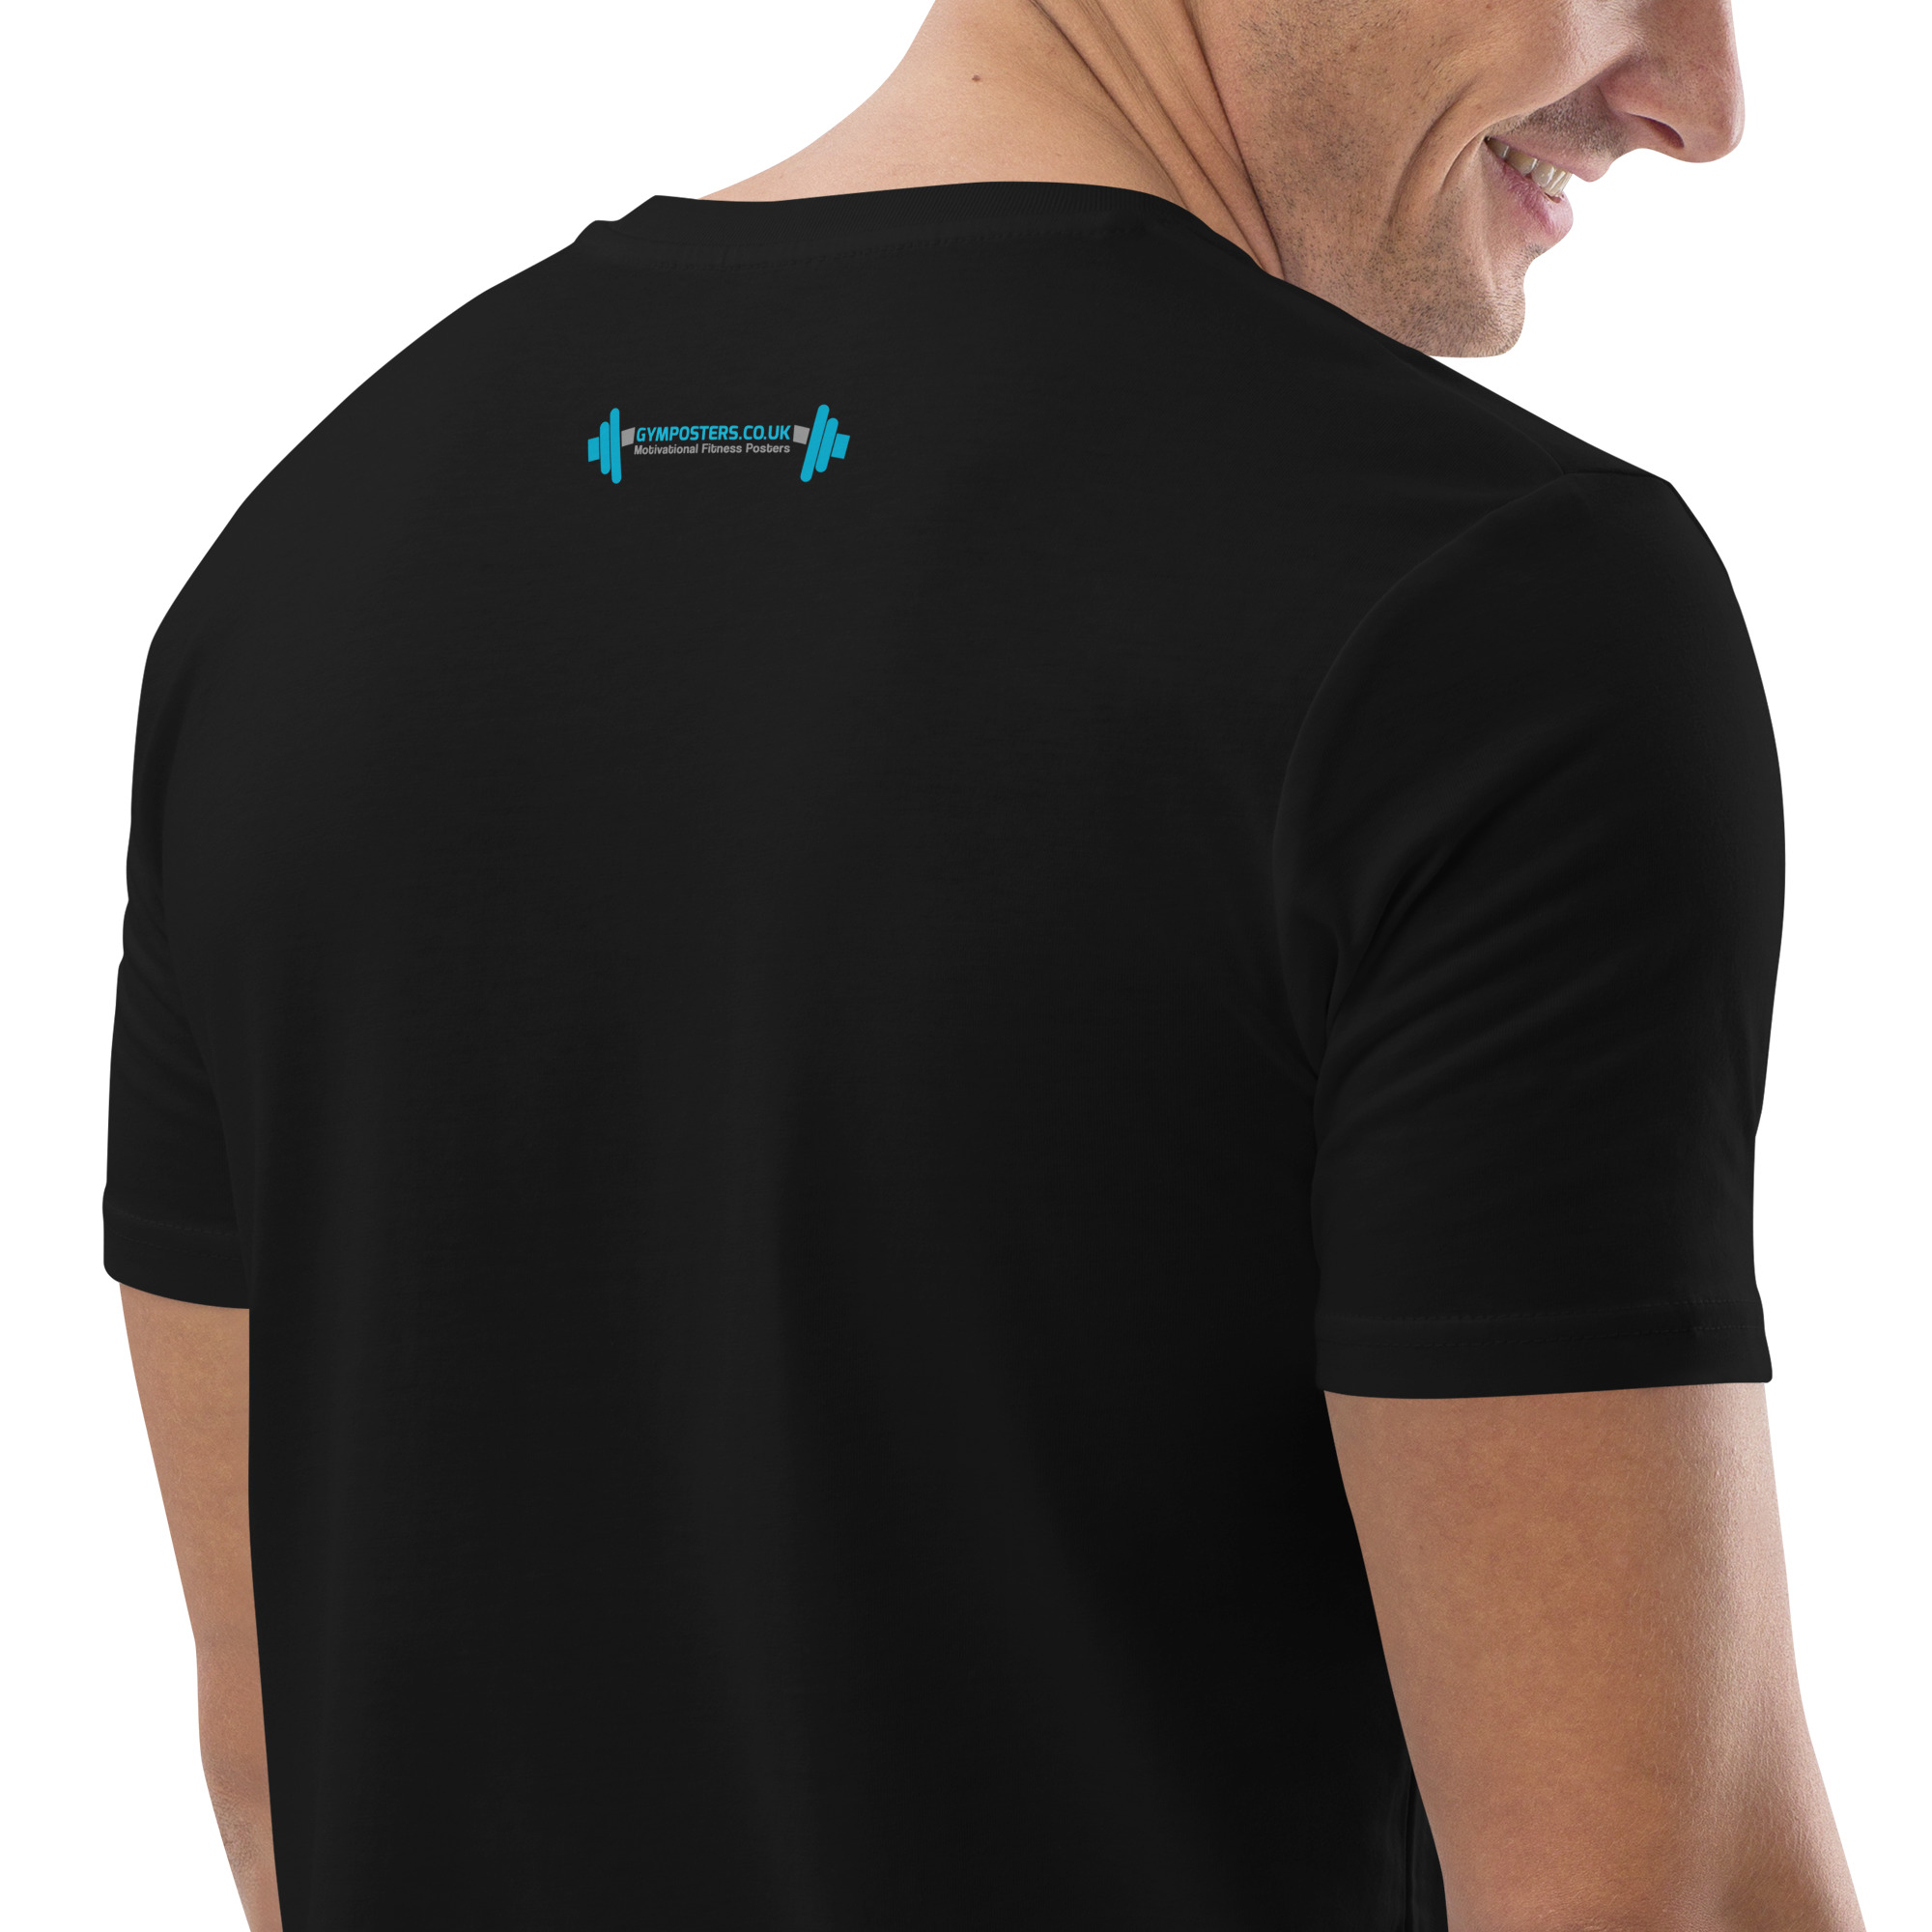 unisex-organic-cotton-t-shirt-black-zoomed-in-3-657855b07bdf6.jpg